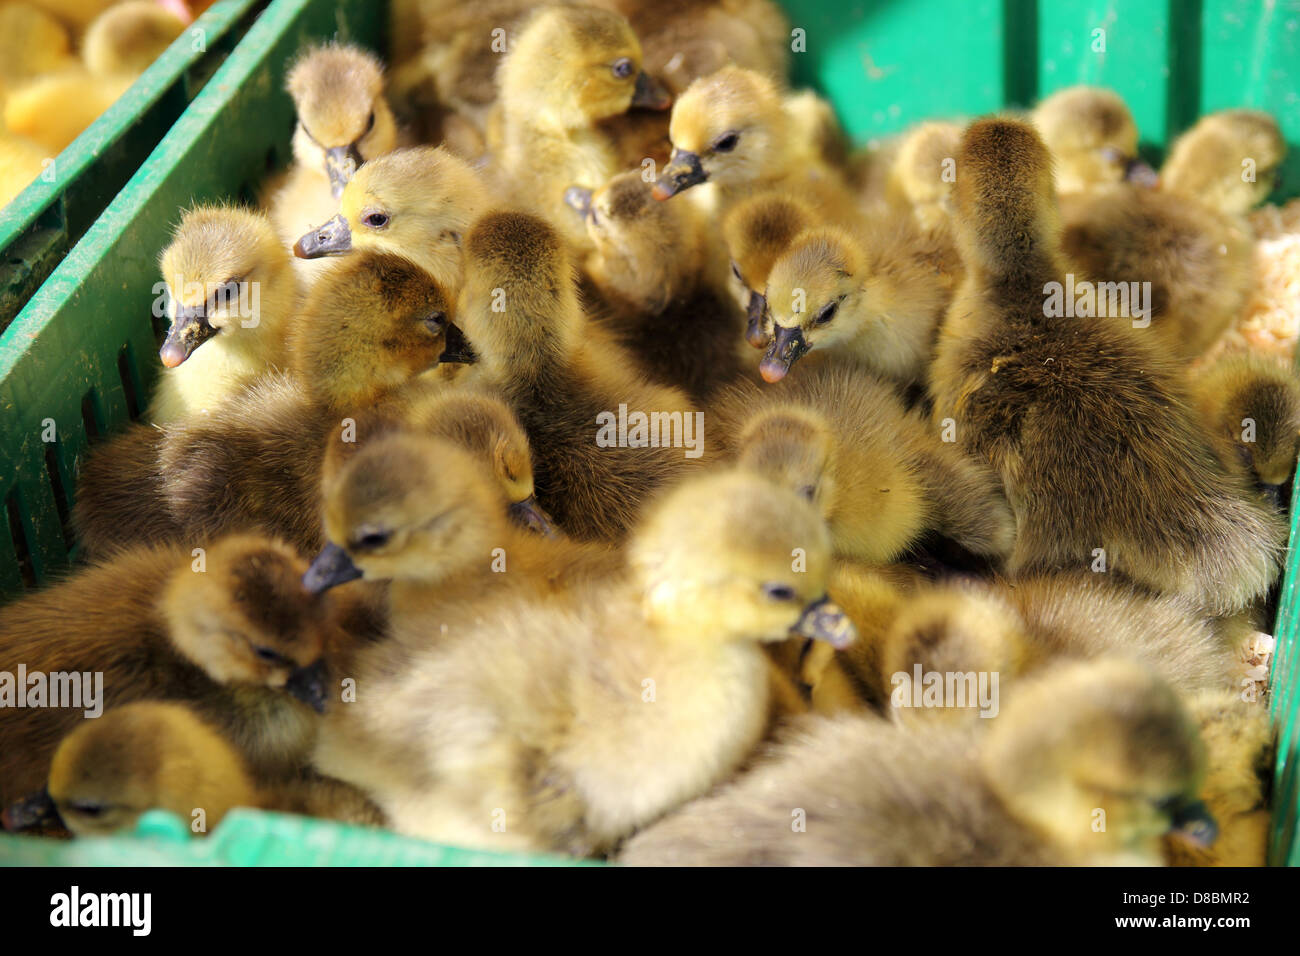 beautiful little ducklings sold in wet markets Stock Photo